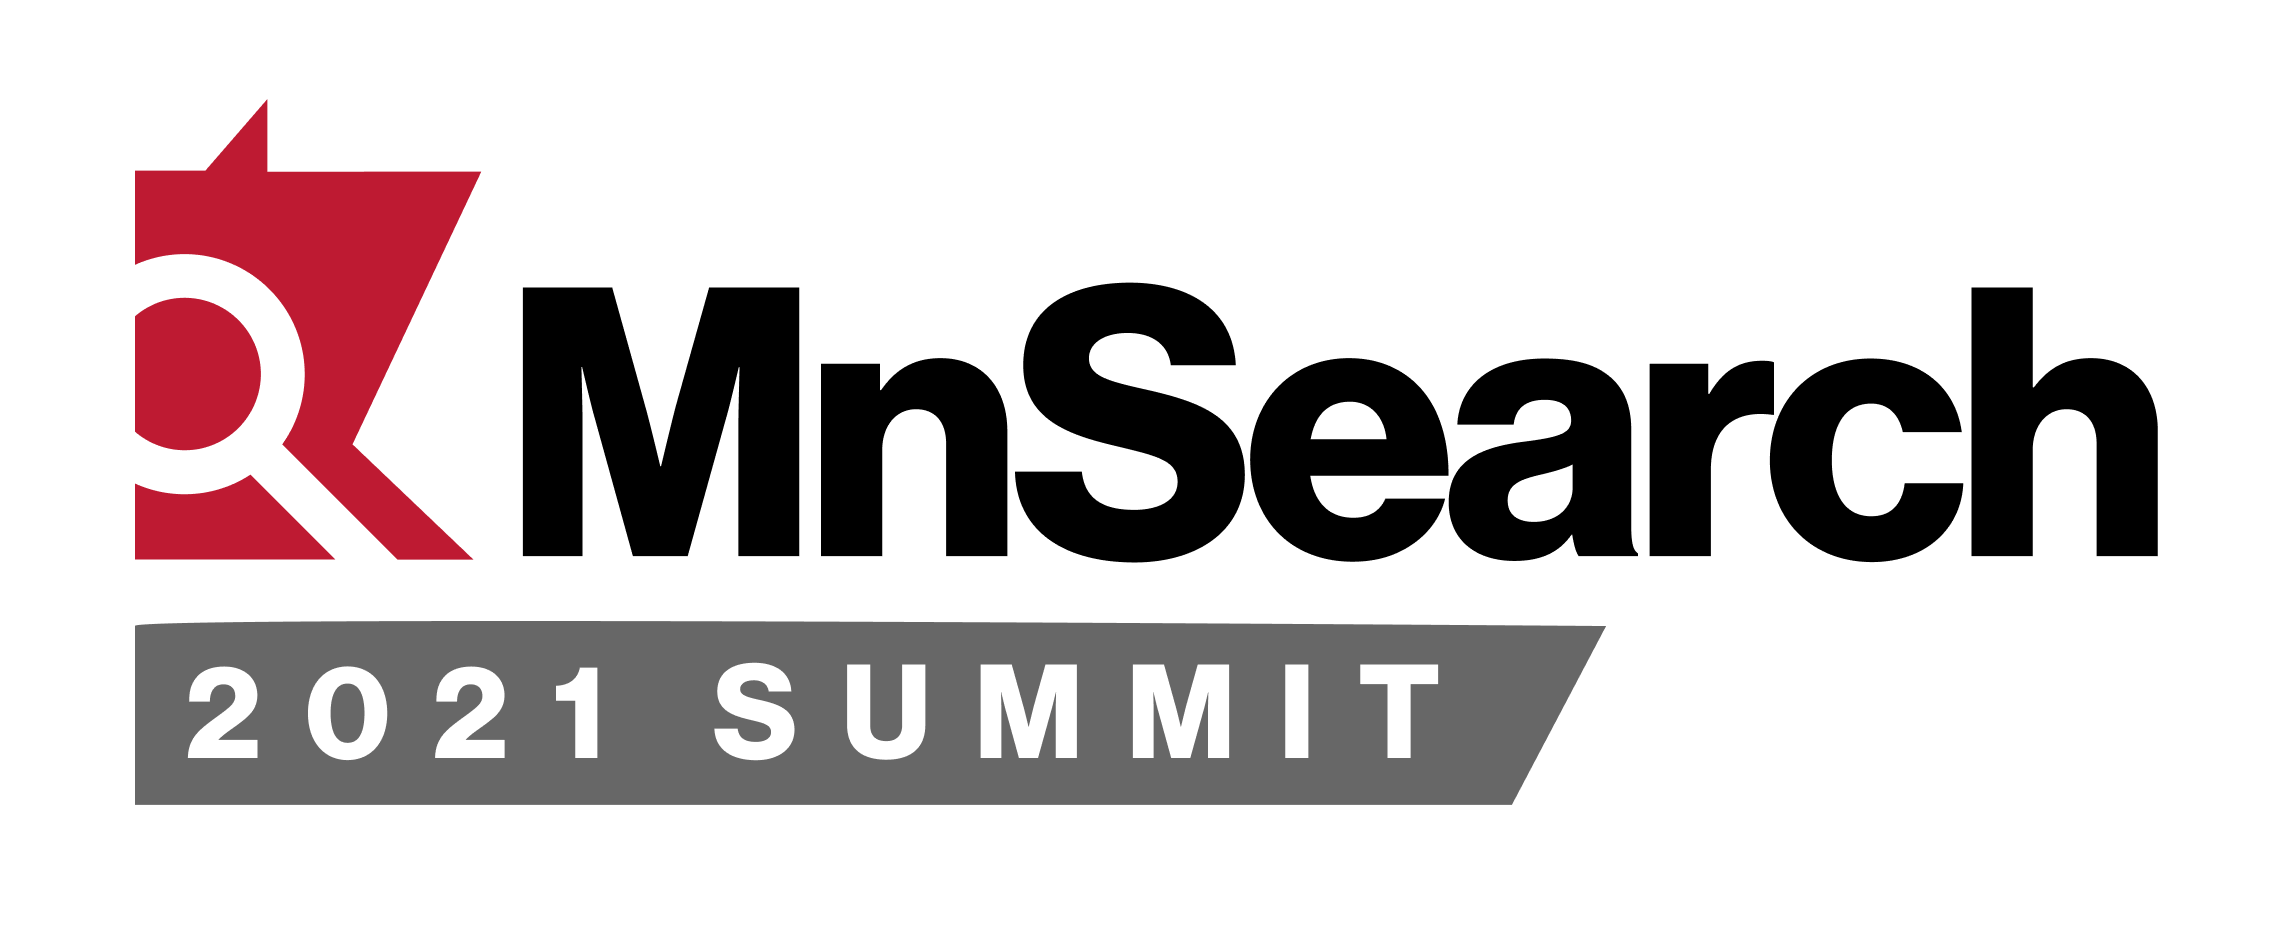 MnSearch 2021 Summit logo